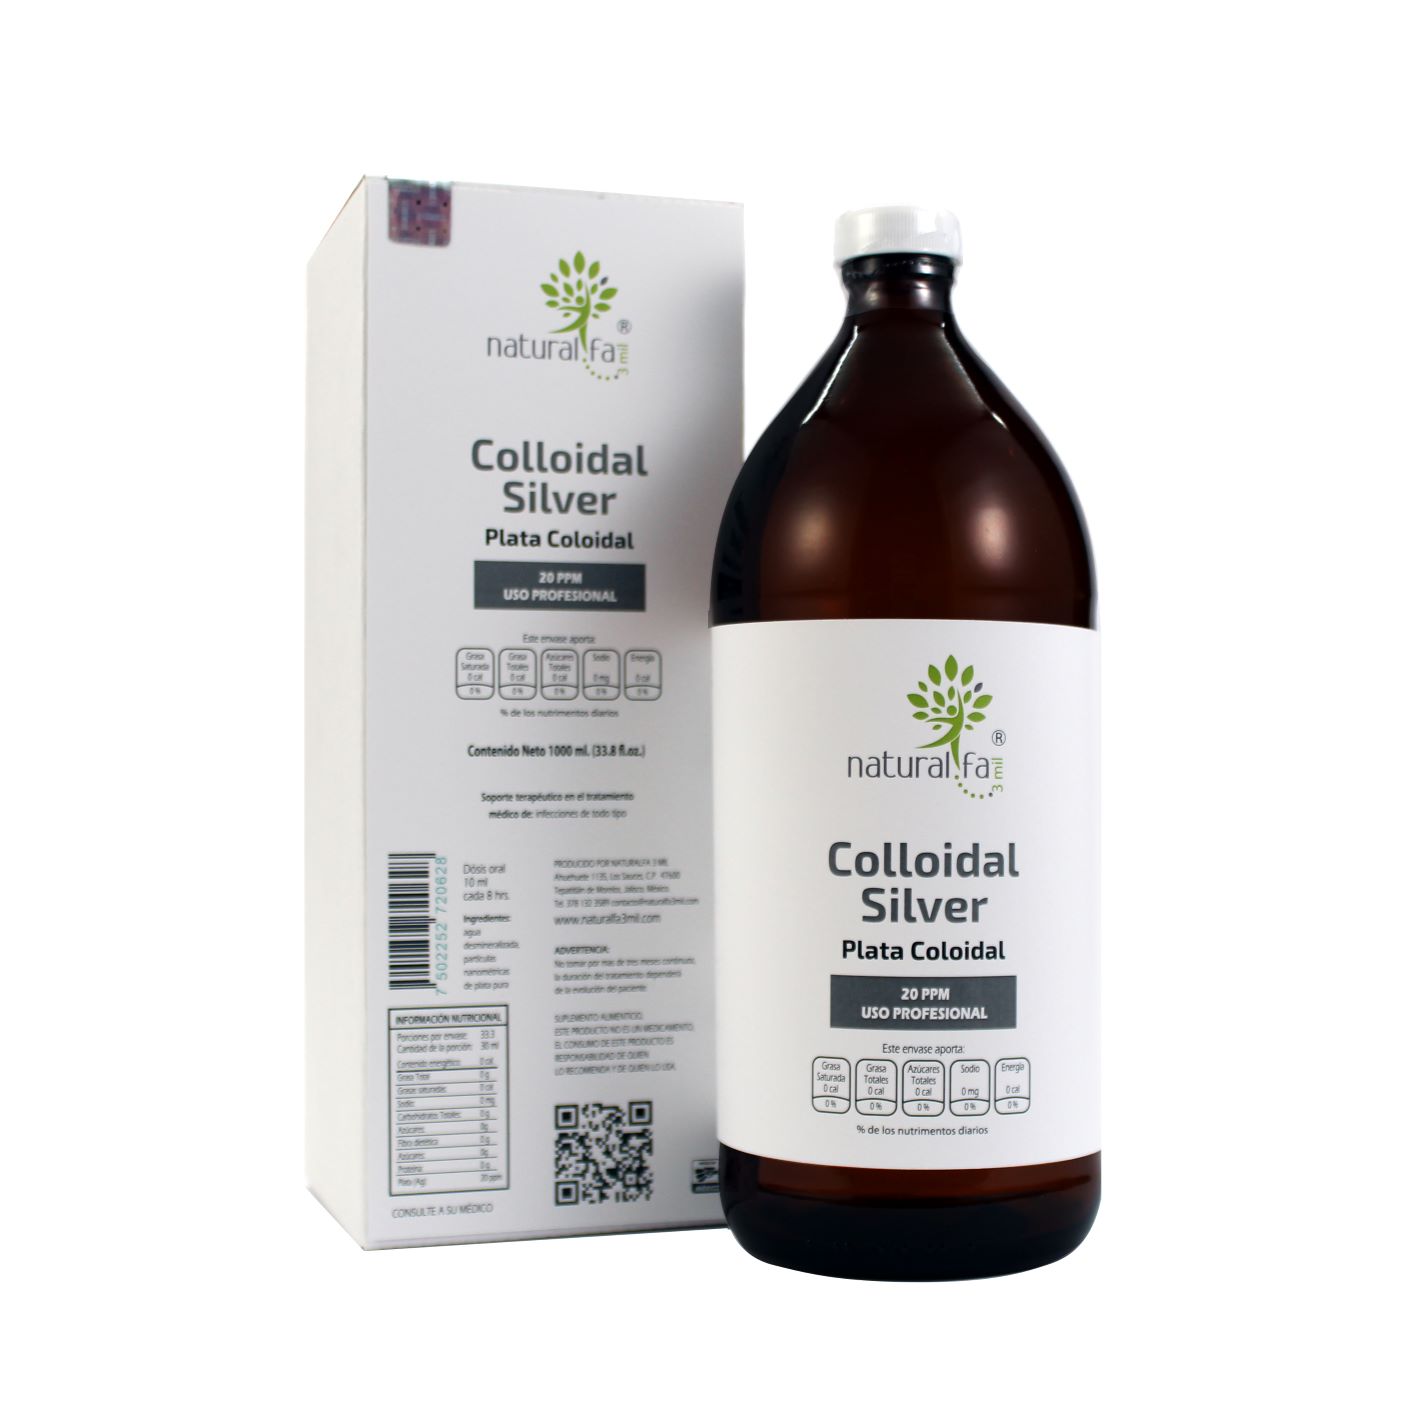 PLATA COLOIDAL x 100 ml - Natural Dietética Online